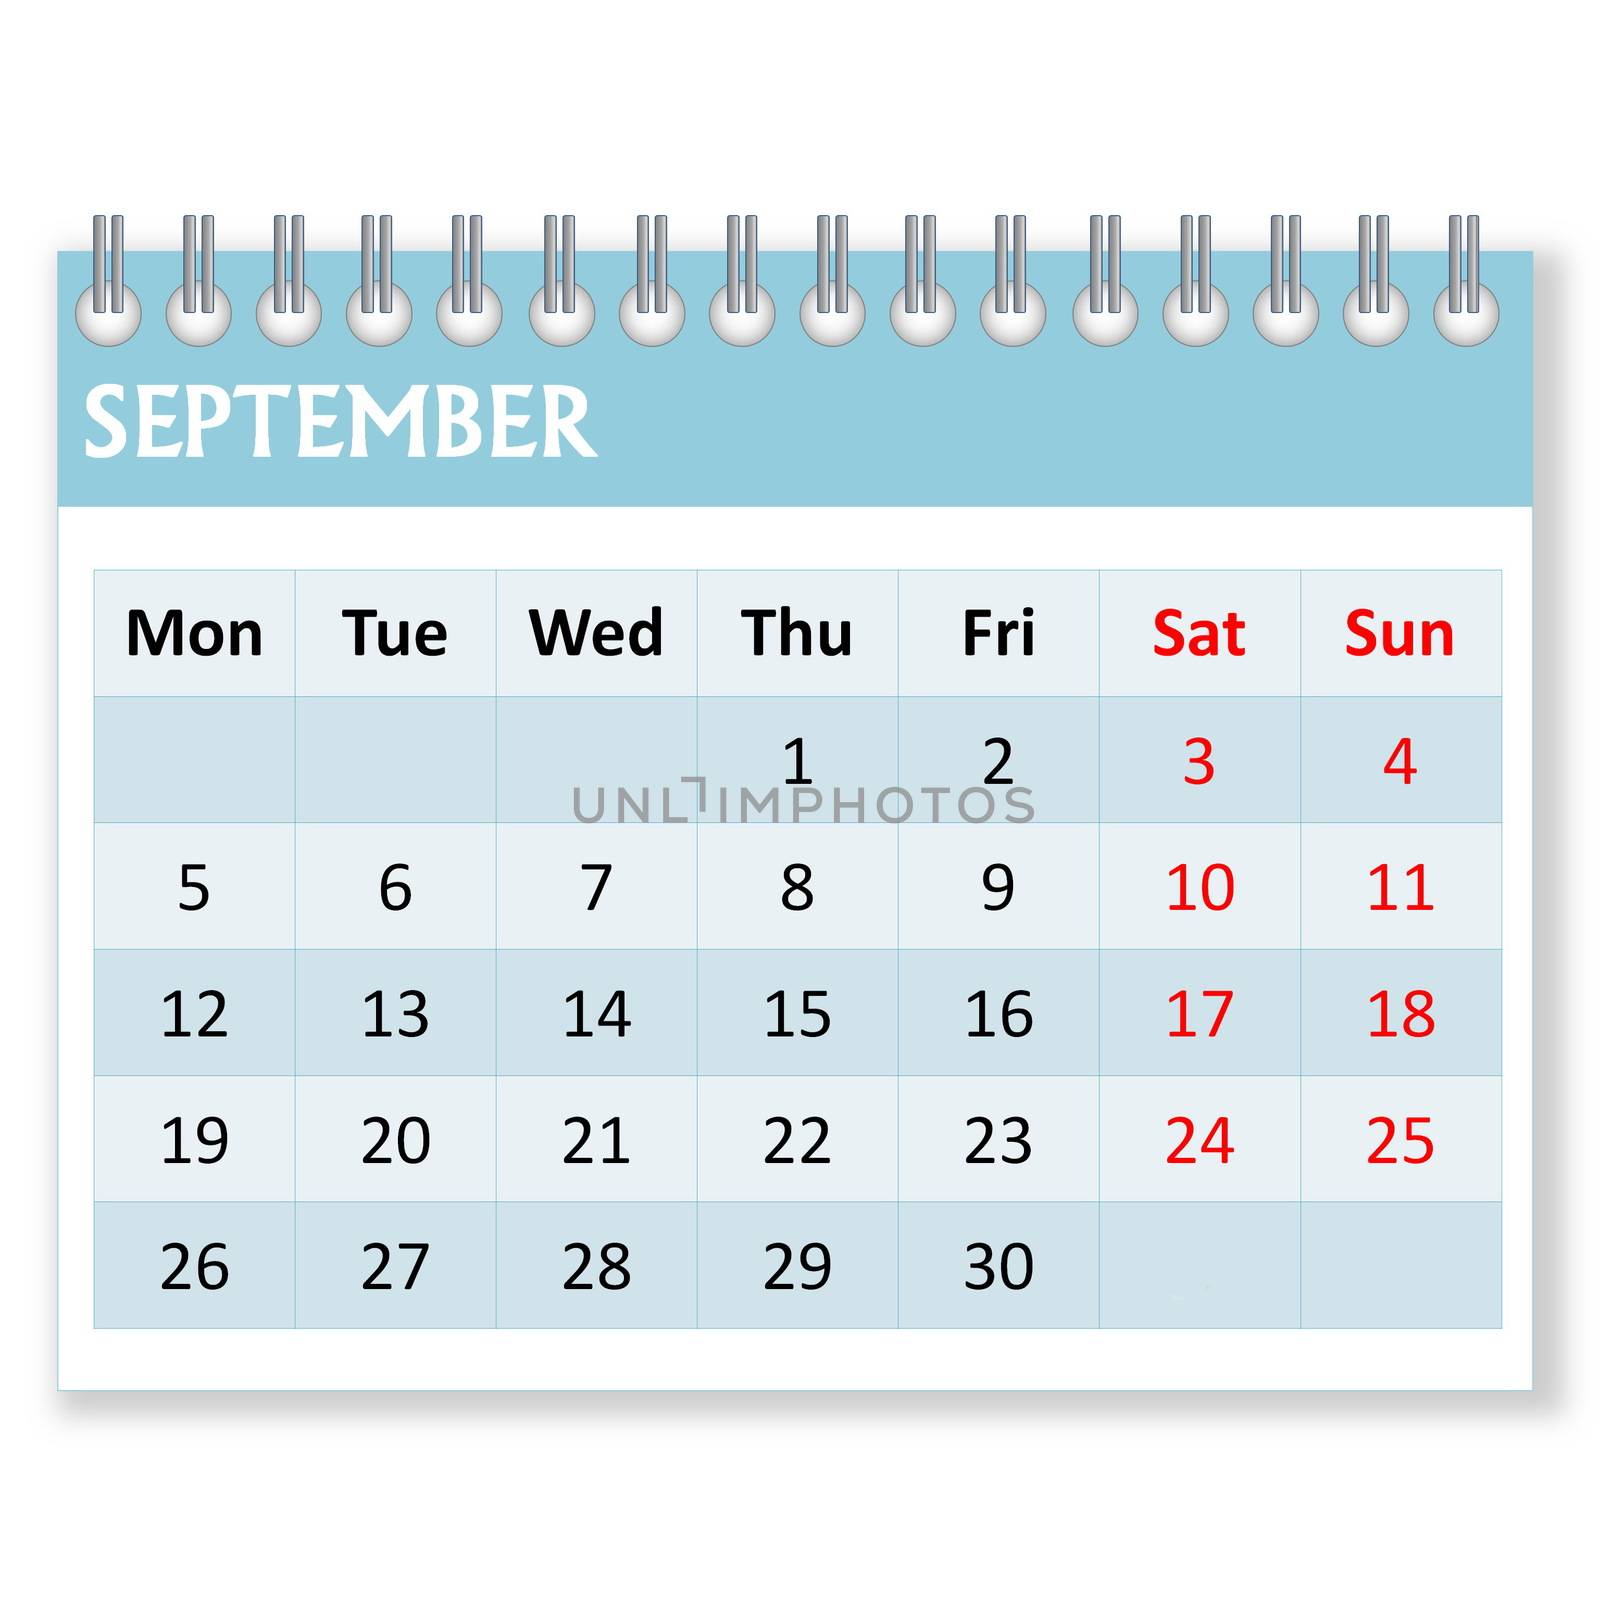 Calendar sheet for september by Elenaphotos21